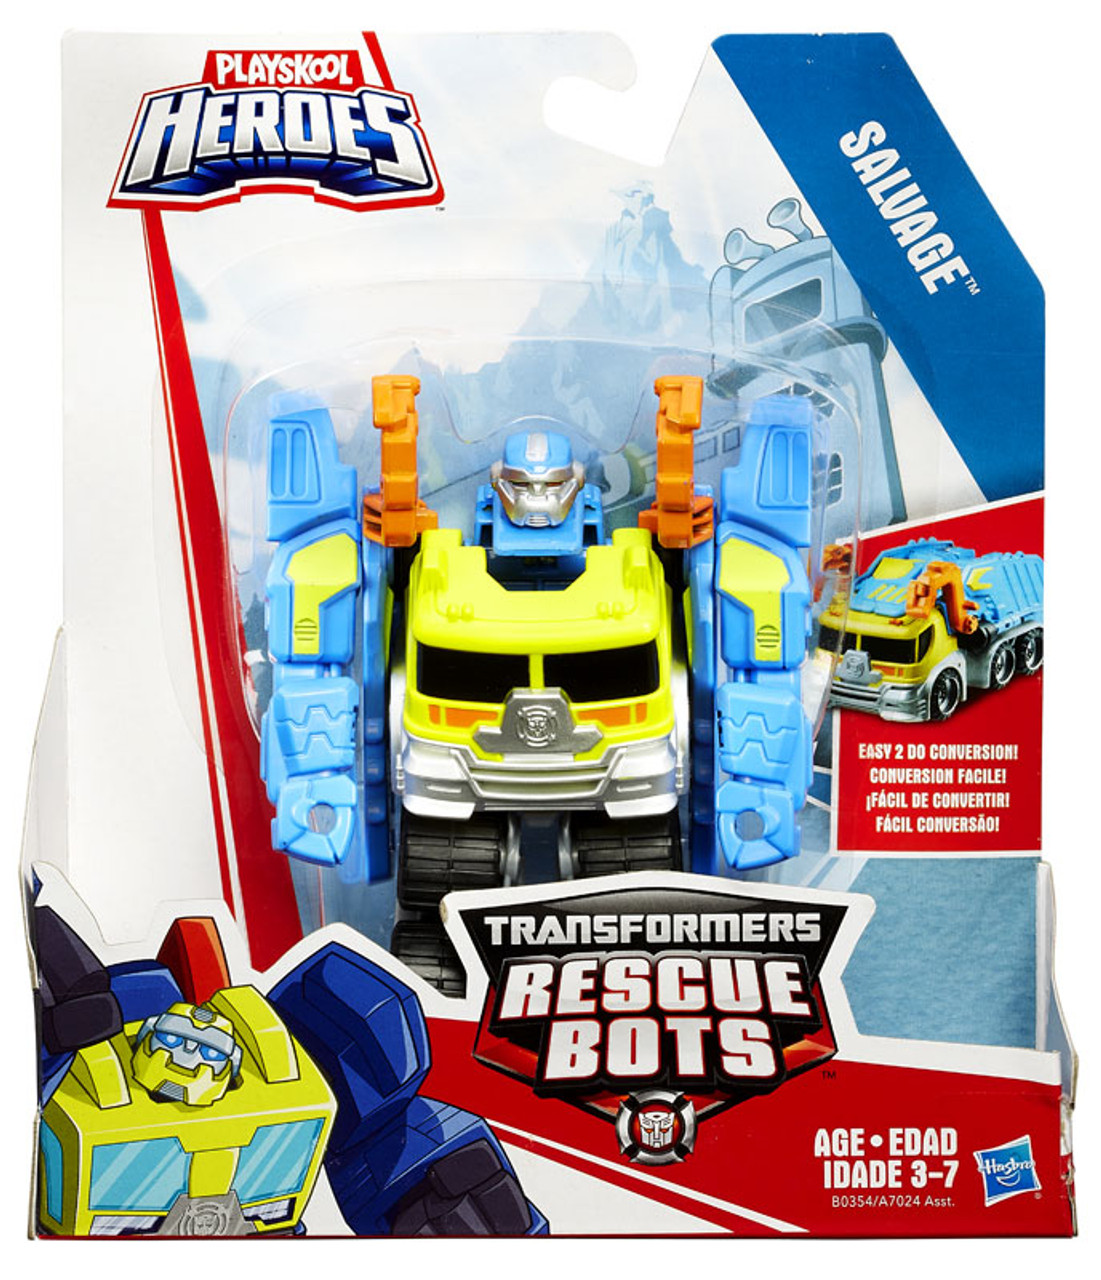 Transformers Rescue Bots Playskool Heroes Salvage Action Figure Rescan